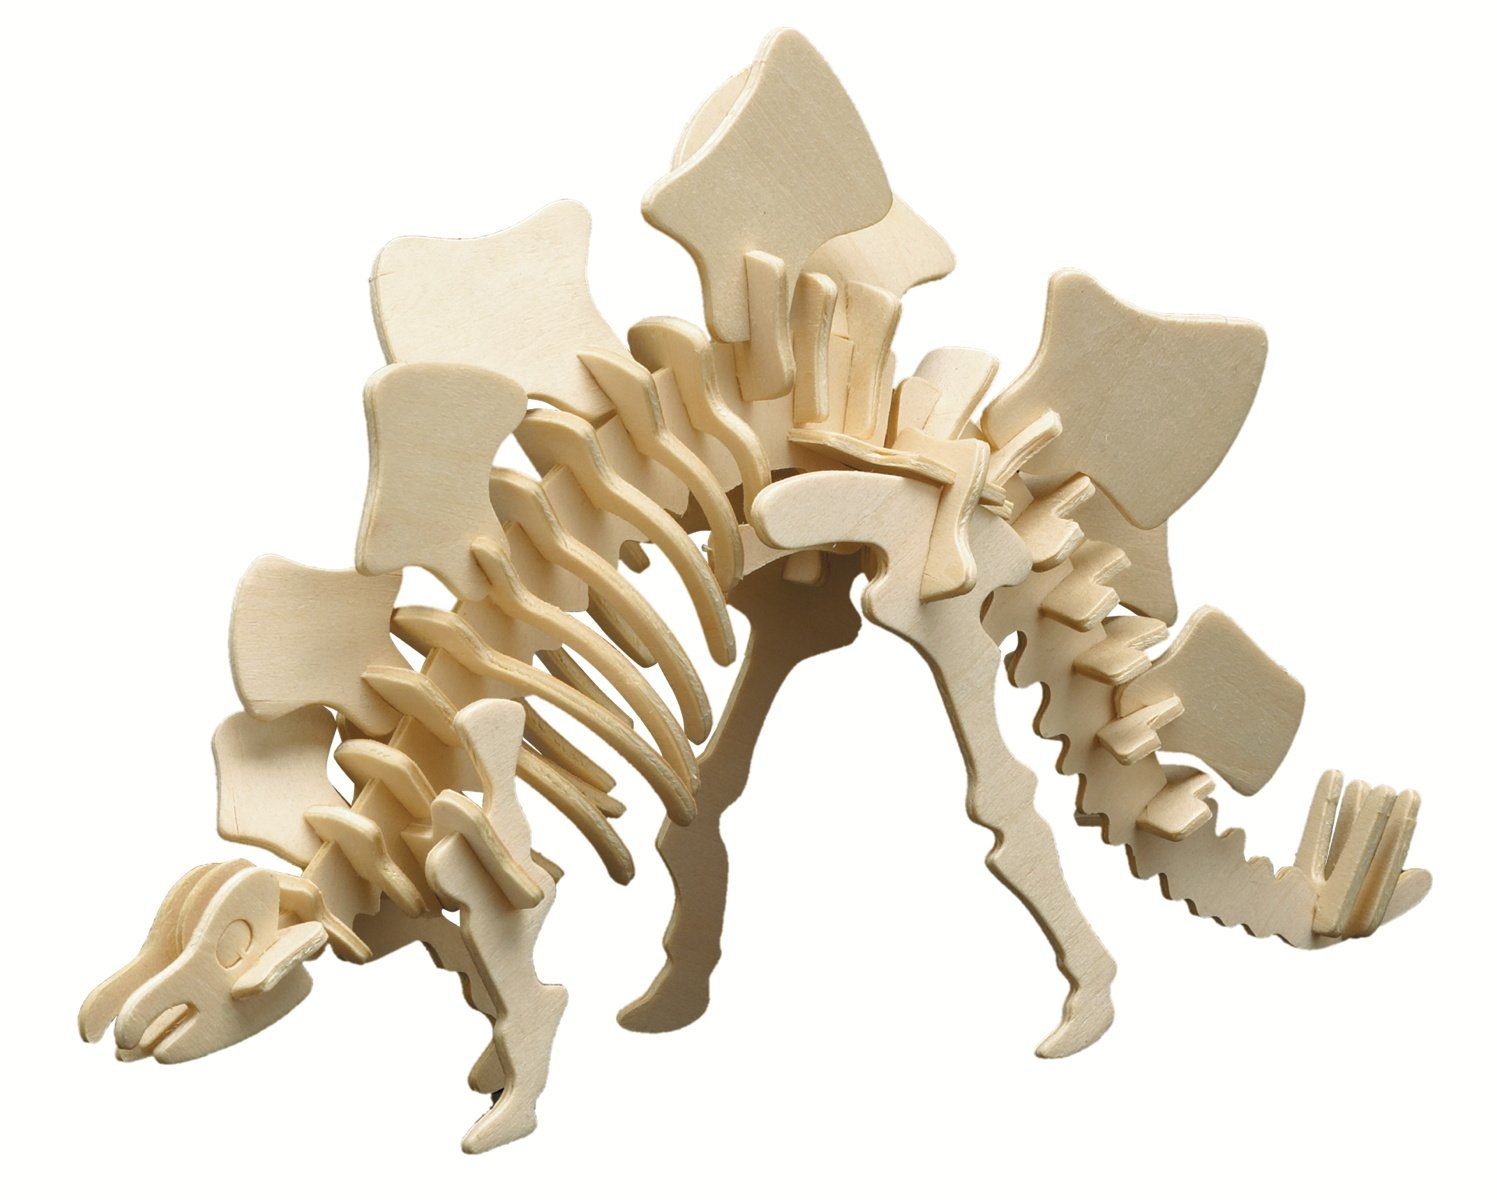 Pebaro 3D-Puzzle Holzbausatz Stegosaurus, 856/5, 44 Puzzleteile